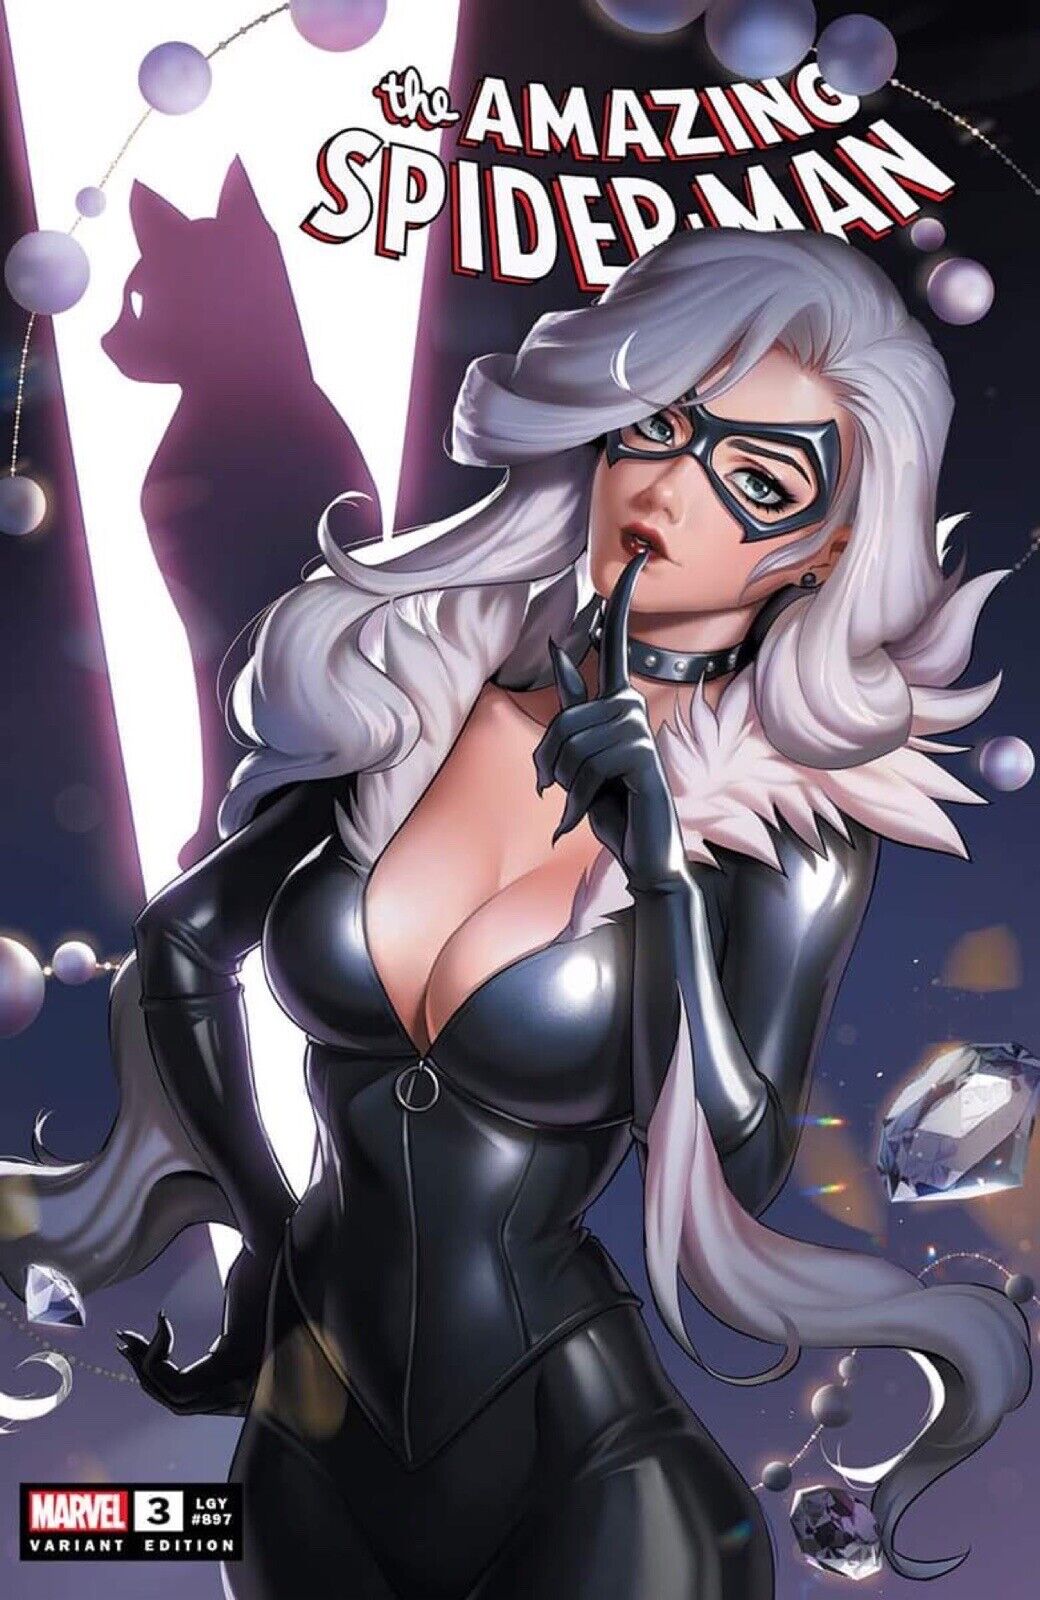 🔥🕷 AMAZING SPIDER-MAN #3 R1C0 Unknown 616 Trade Dress Variant Black Cat